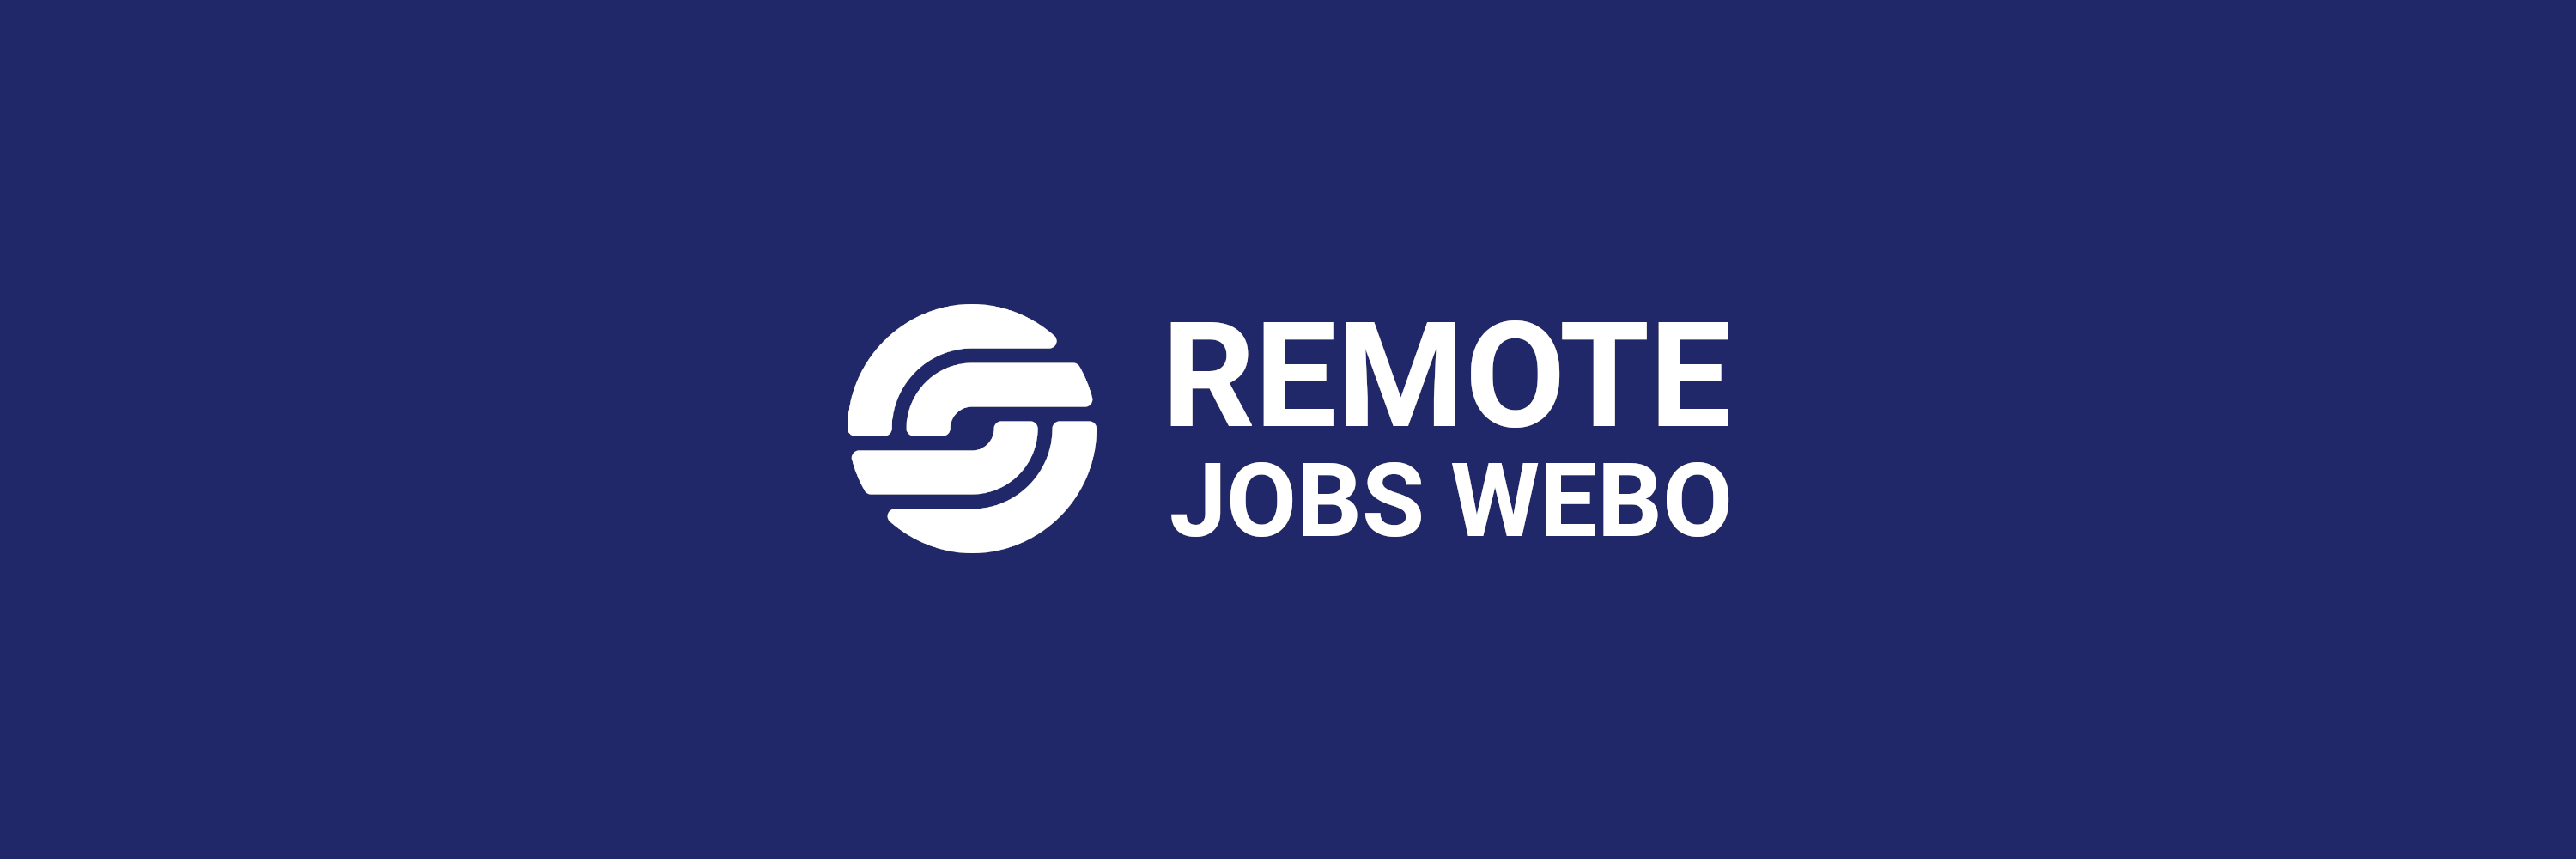 Remote Jobs Webo Landing page